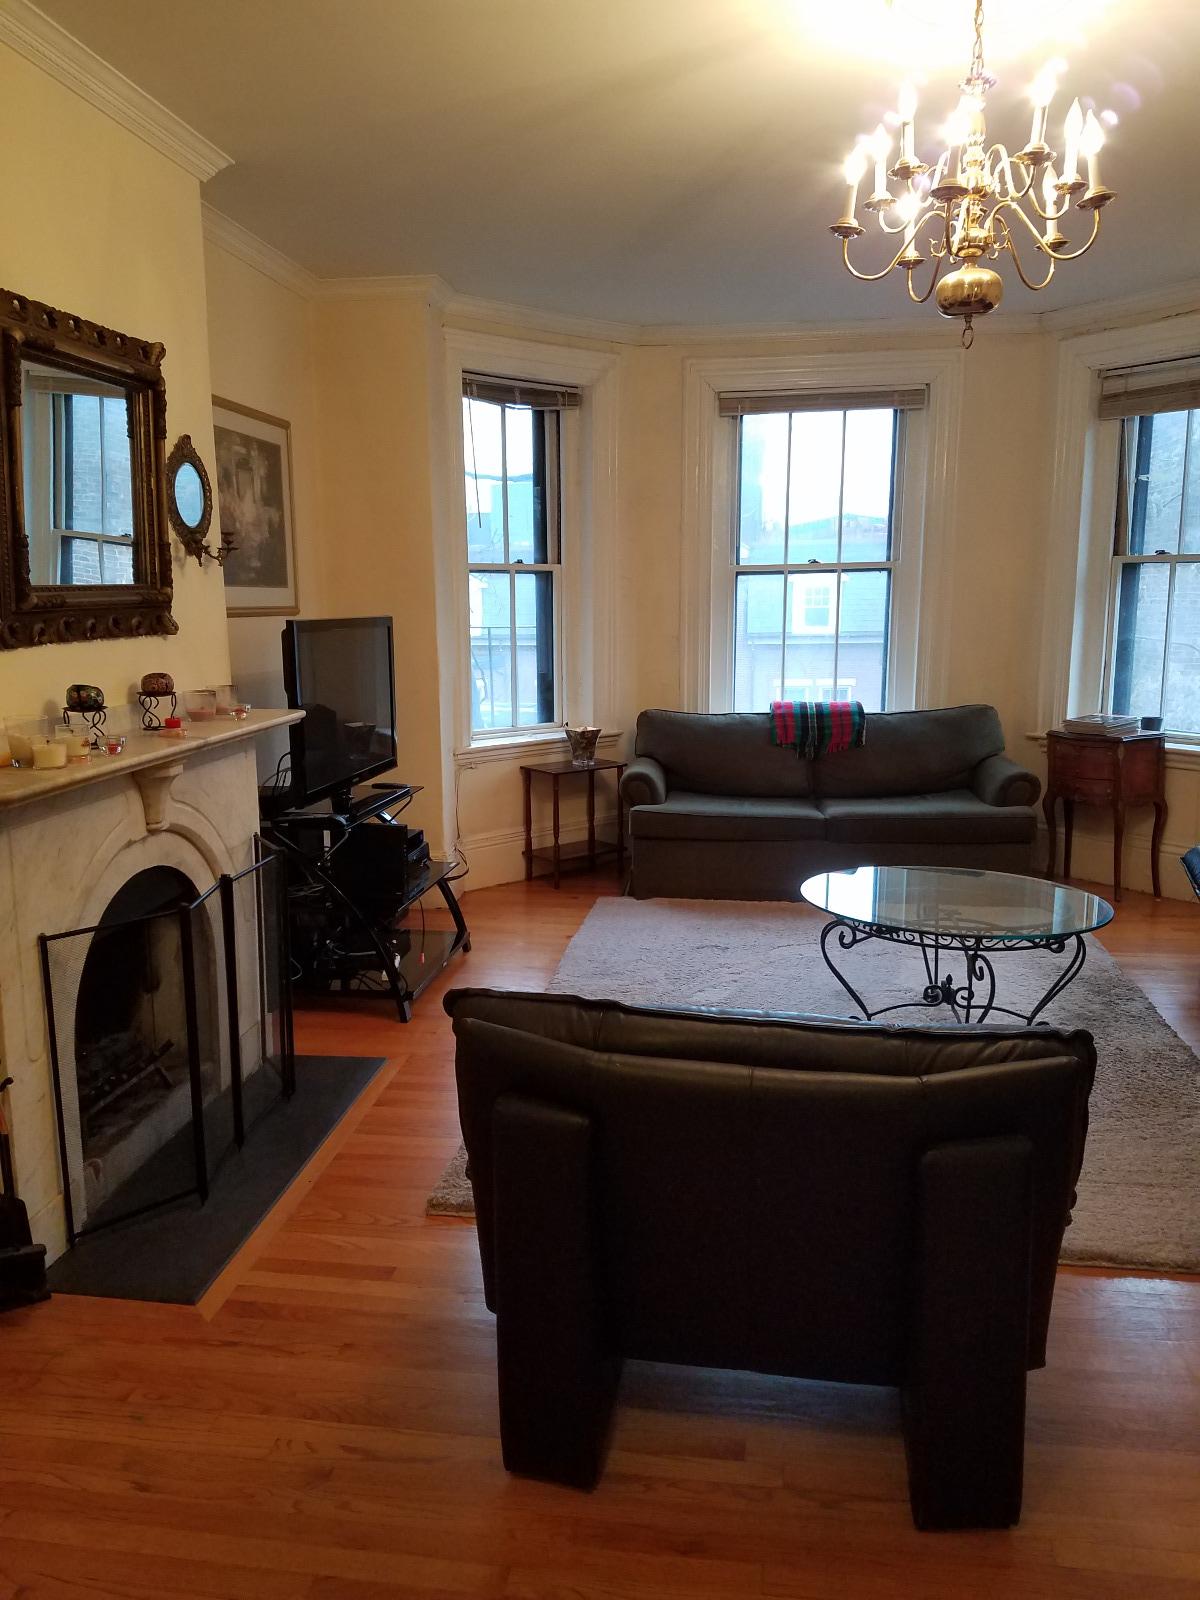 Photos of apartment on Hancock St.,Boston MA 02114